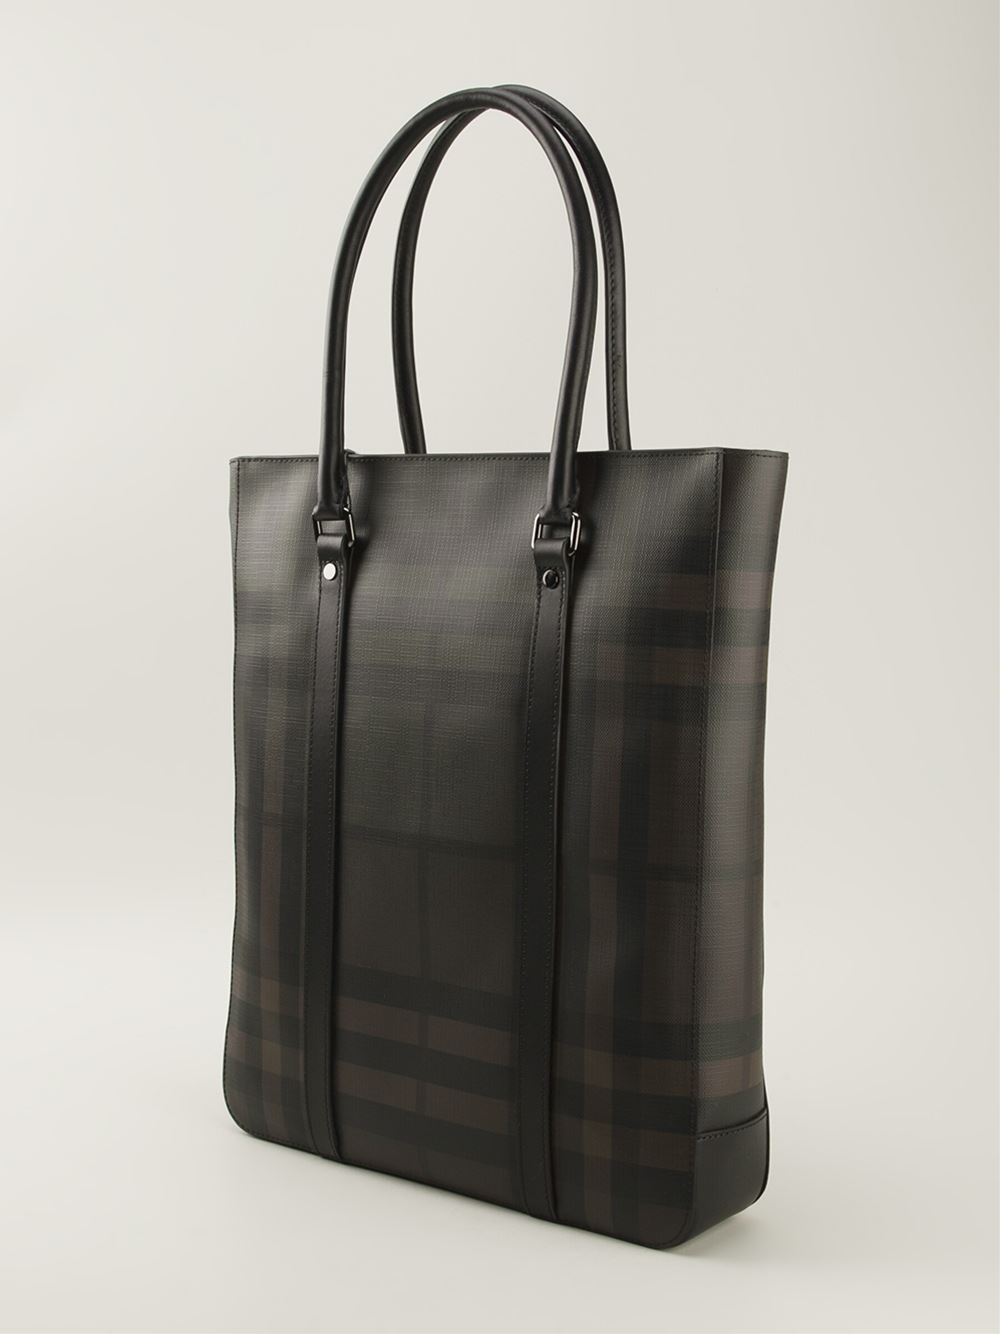 Burberry Shopper Bag in Brown for Men - Lyst